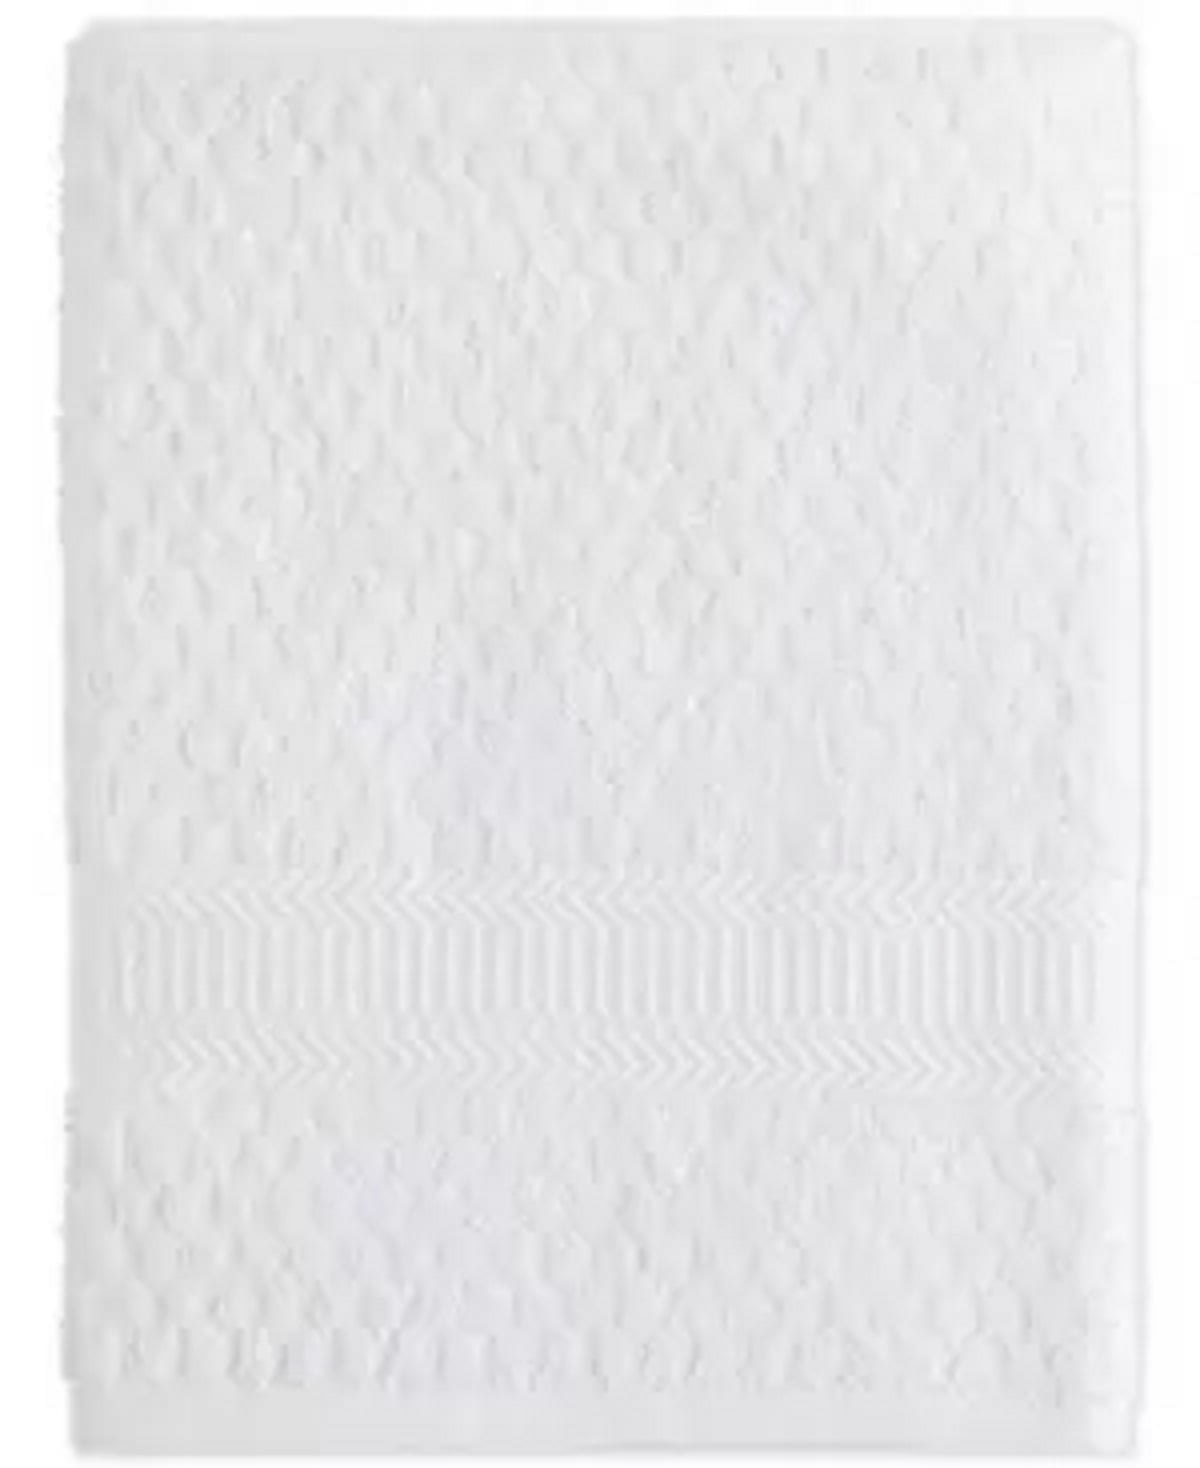 IndusFabrics Bath Towel Ultra Soft, Absorbent & Quick Dry Bath Towel